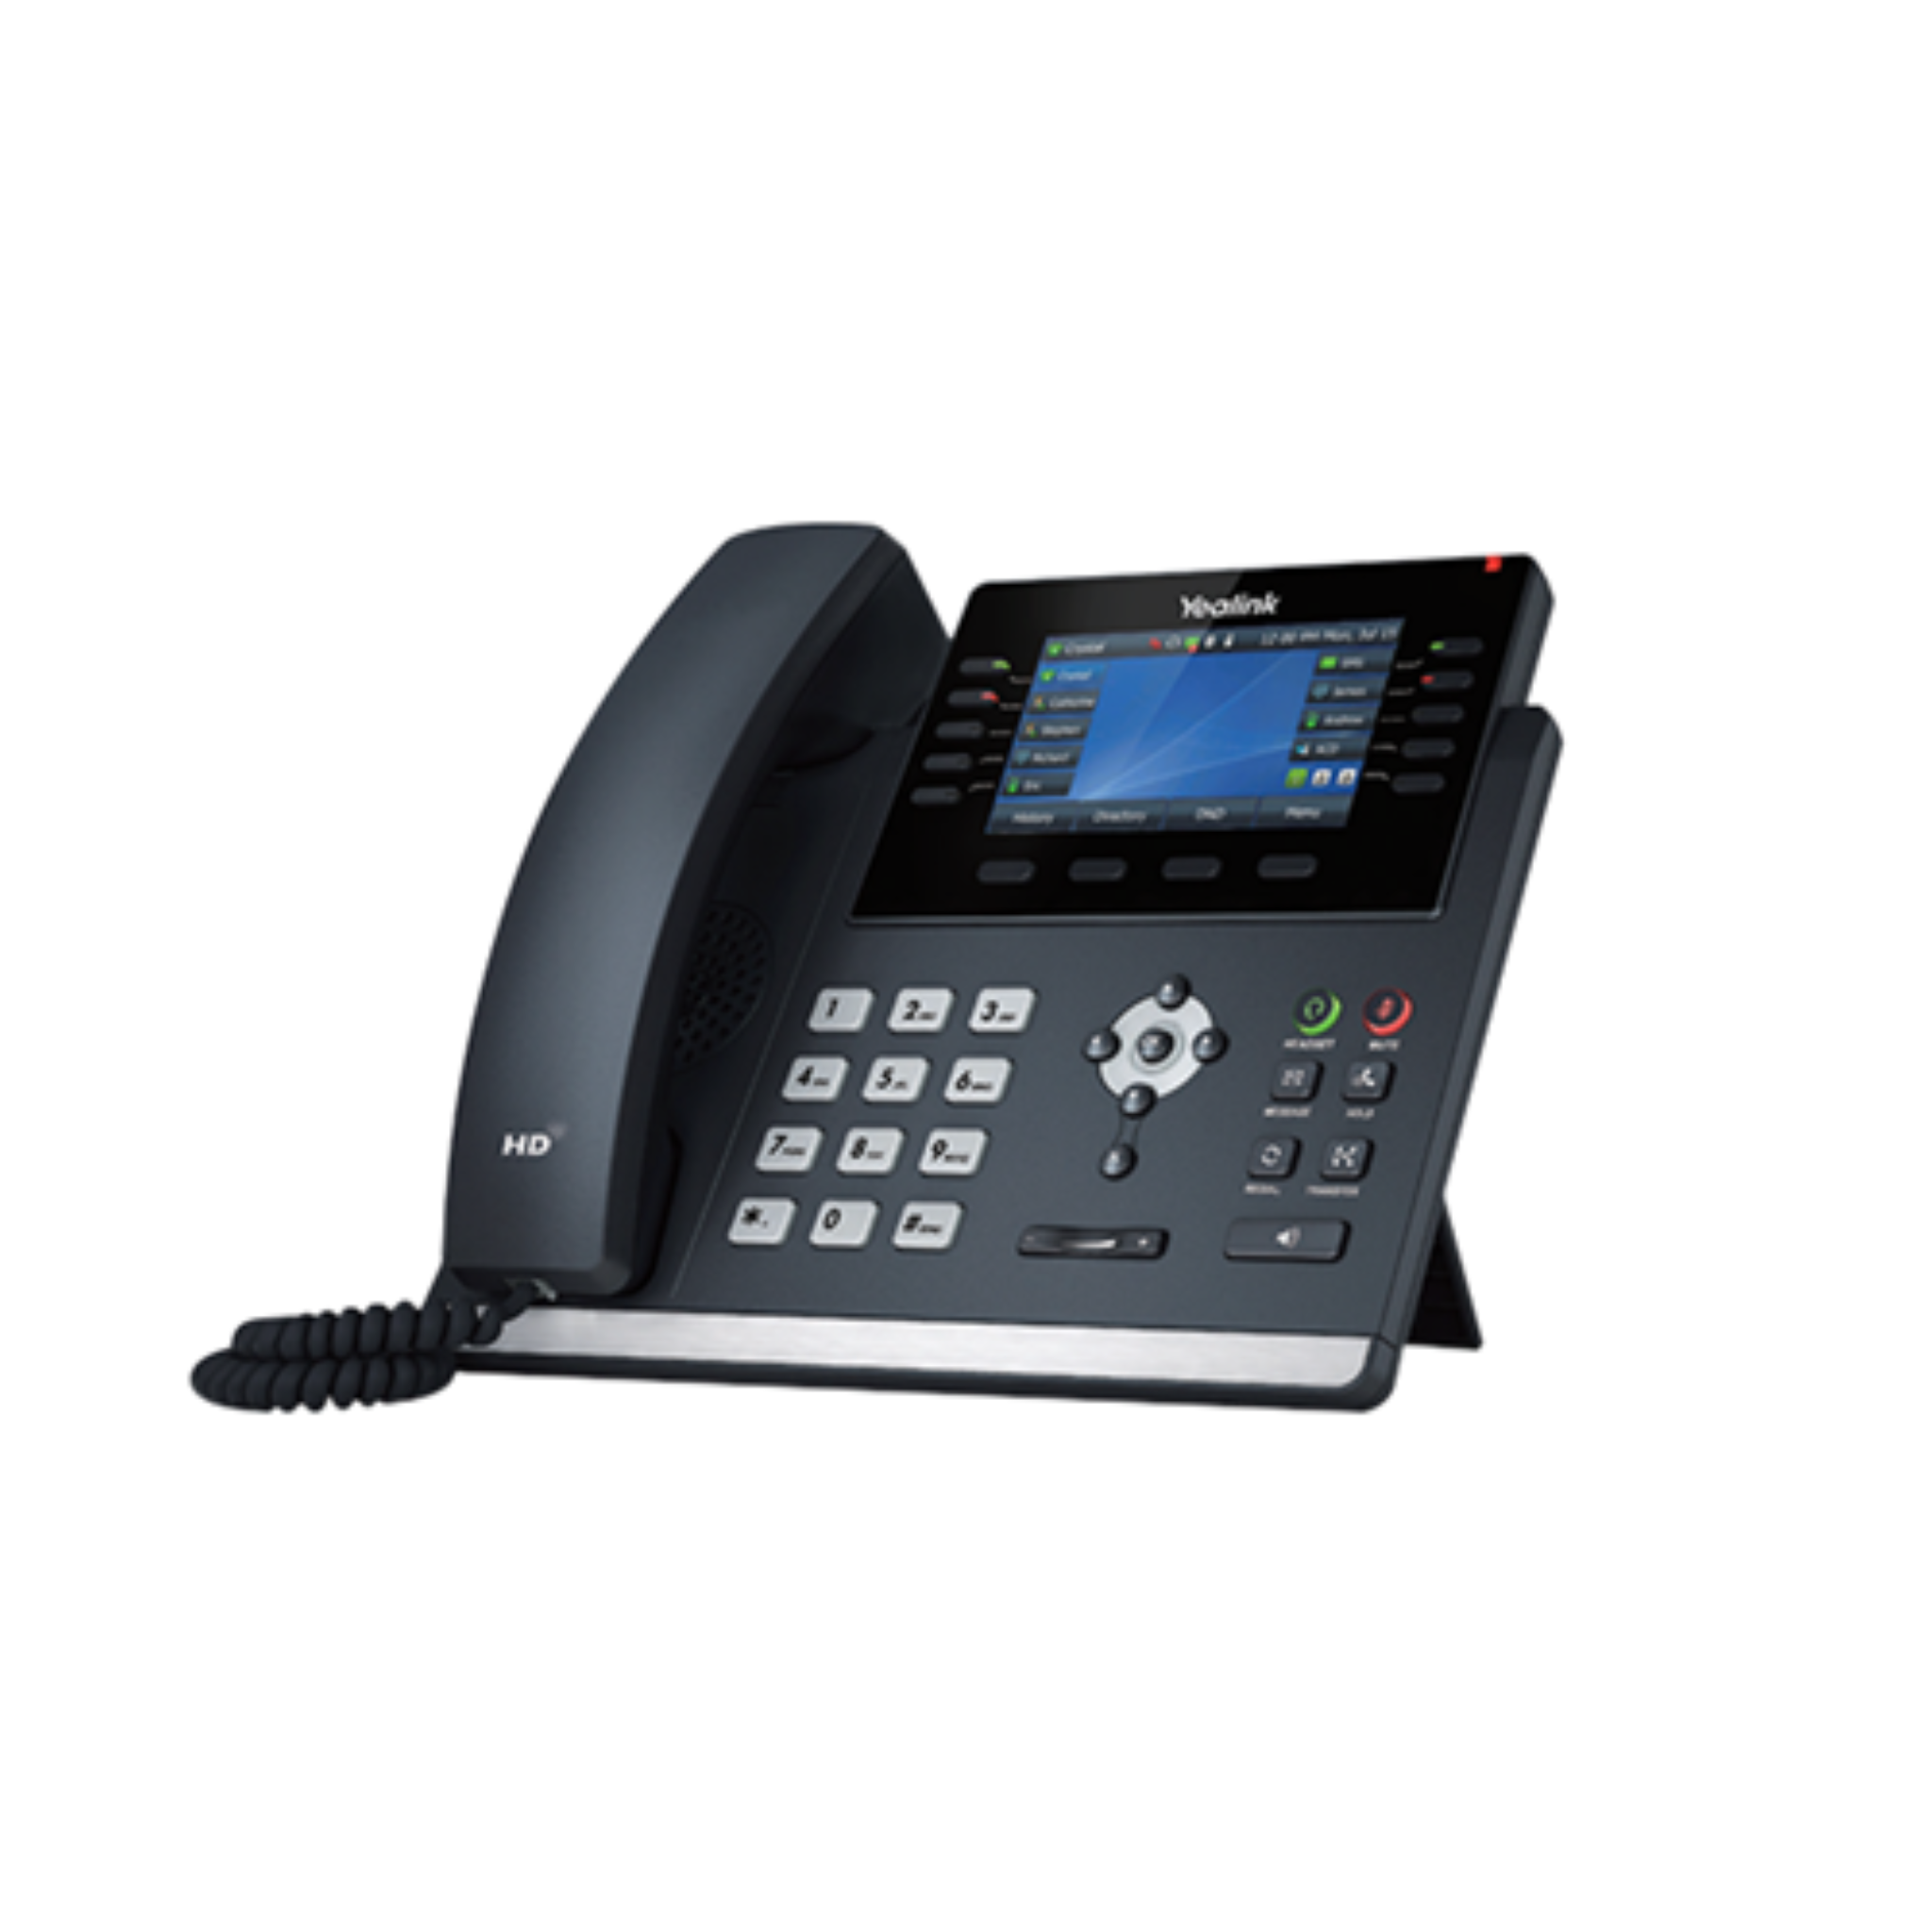 Yealink T46U VoIP/SIP Phone (SIP-T46U), 16-Lines, 2 x Gigabit Ports, PoE, 4.3-inch Colour Display